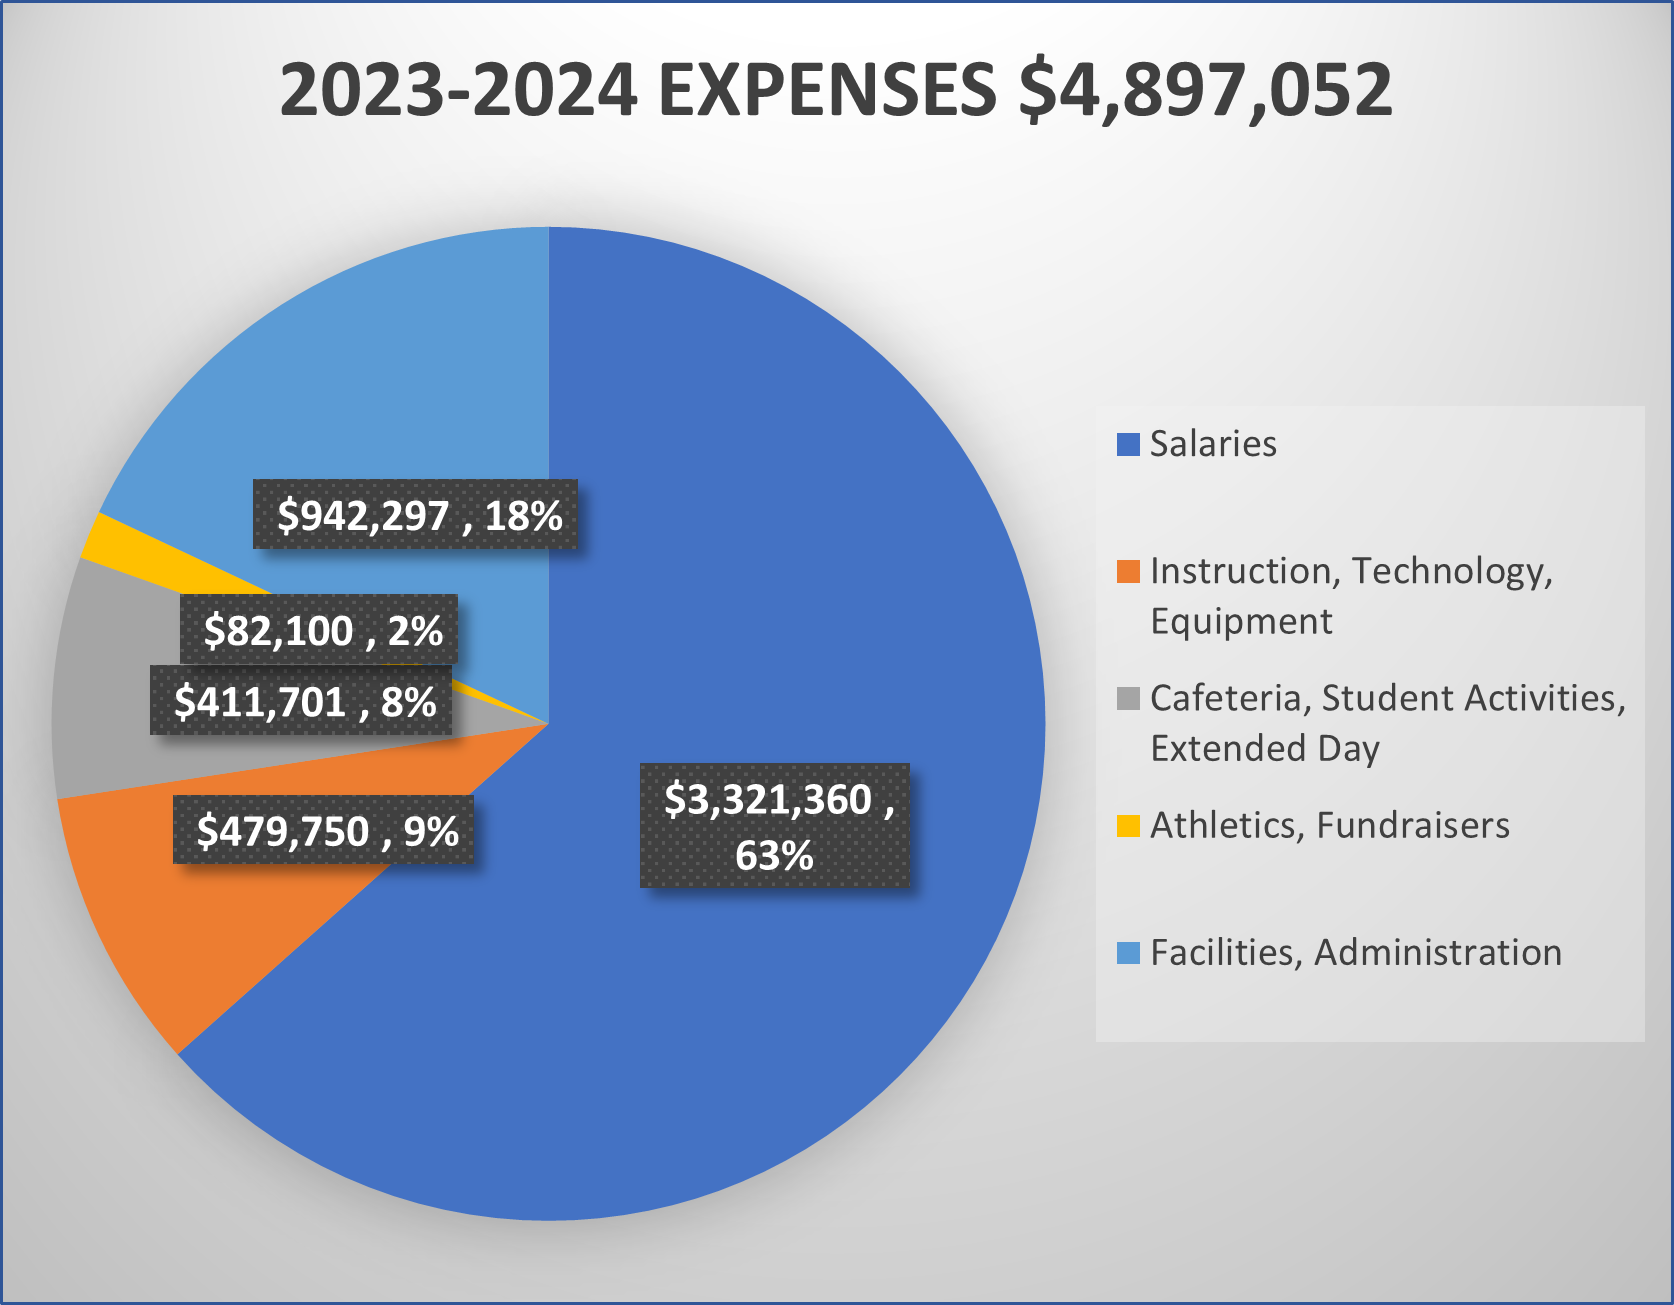 2023-2024 Expenses